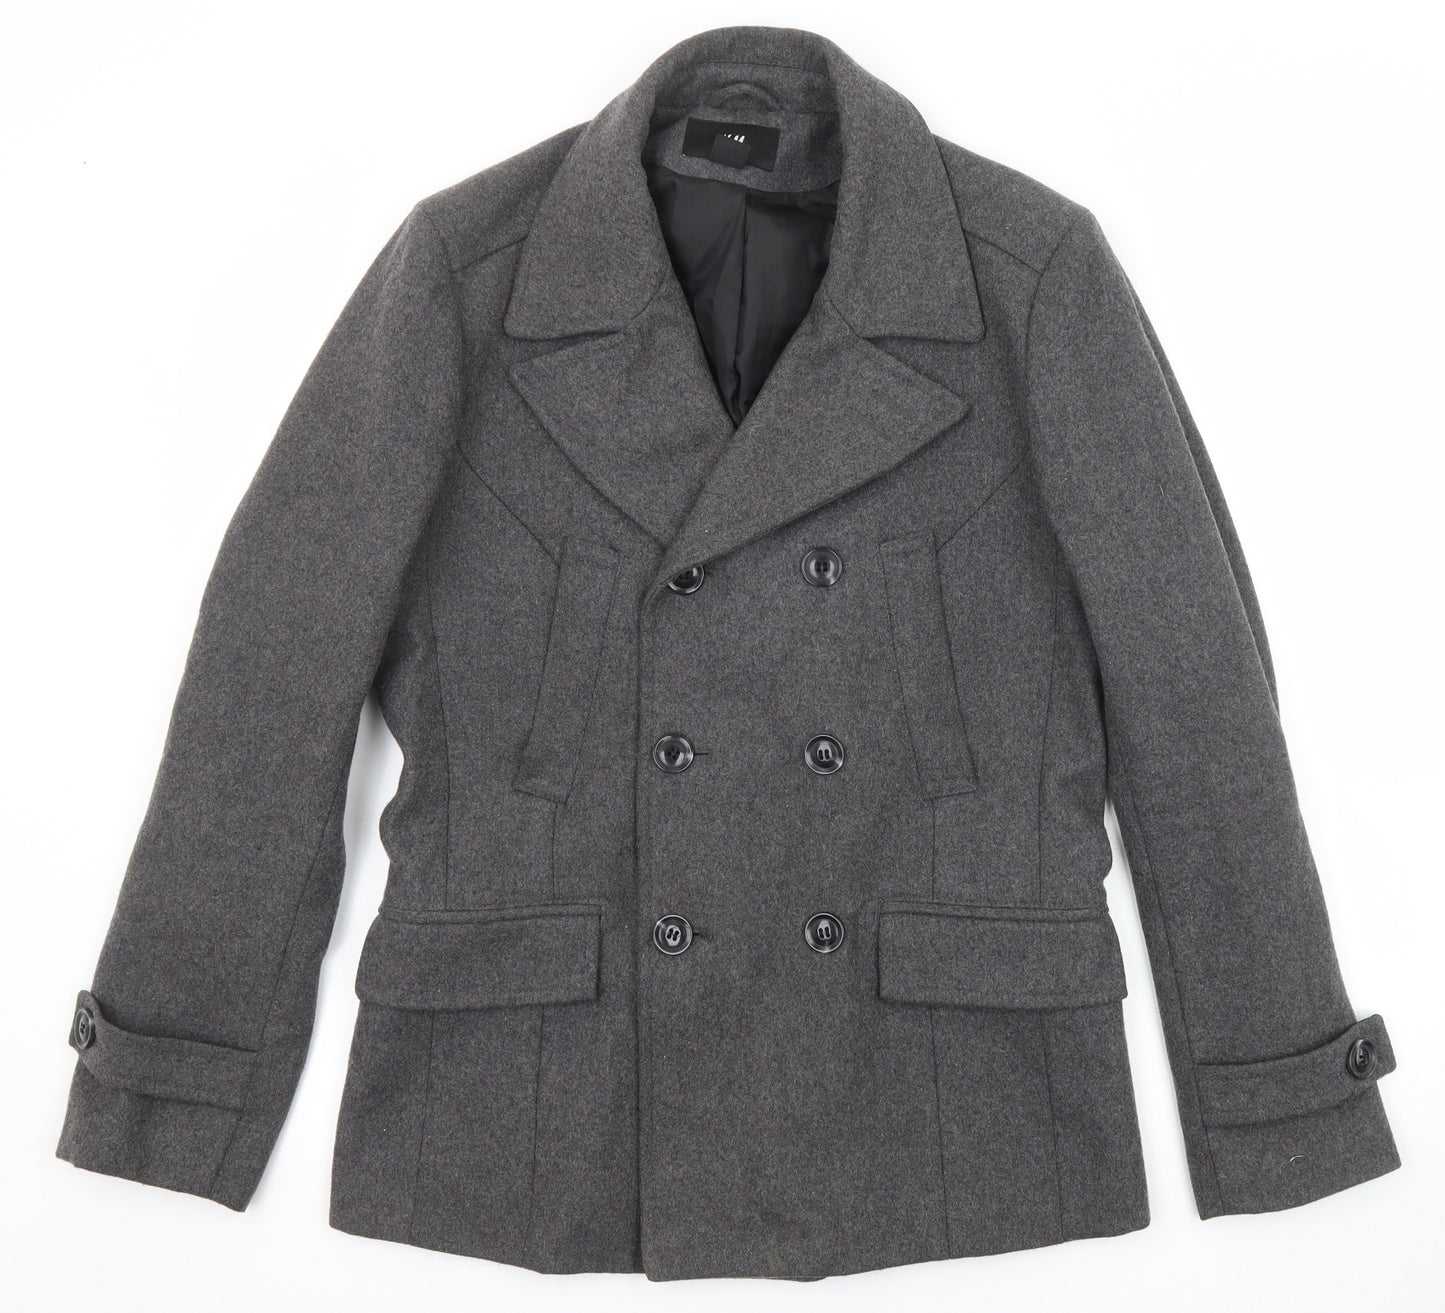 H&M Womens Grey Pea Coat Coat Size 18 Button